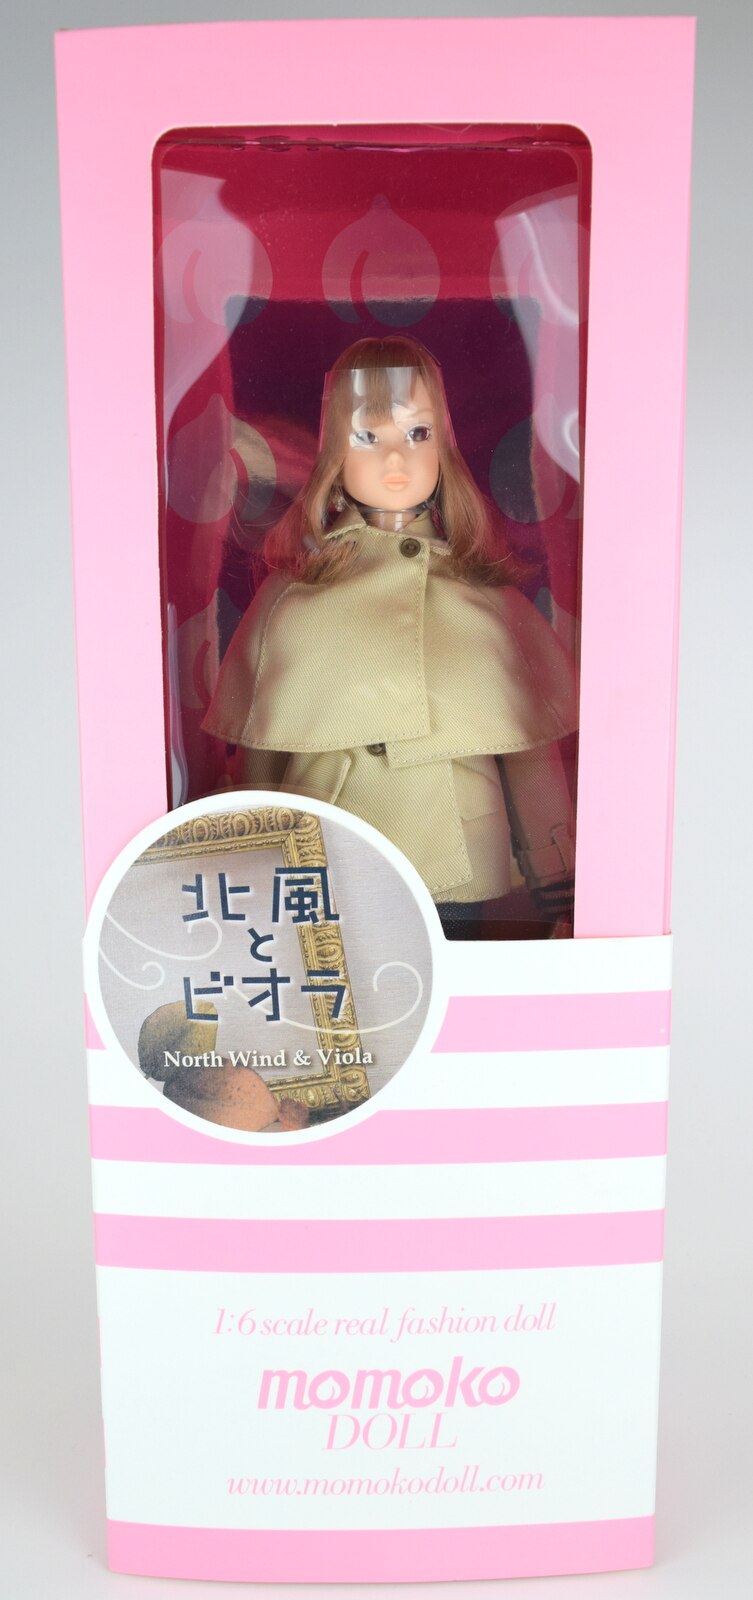 Sekiguchi - Momoko Doll - North Wind and Viola | Mandarake Online Shop